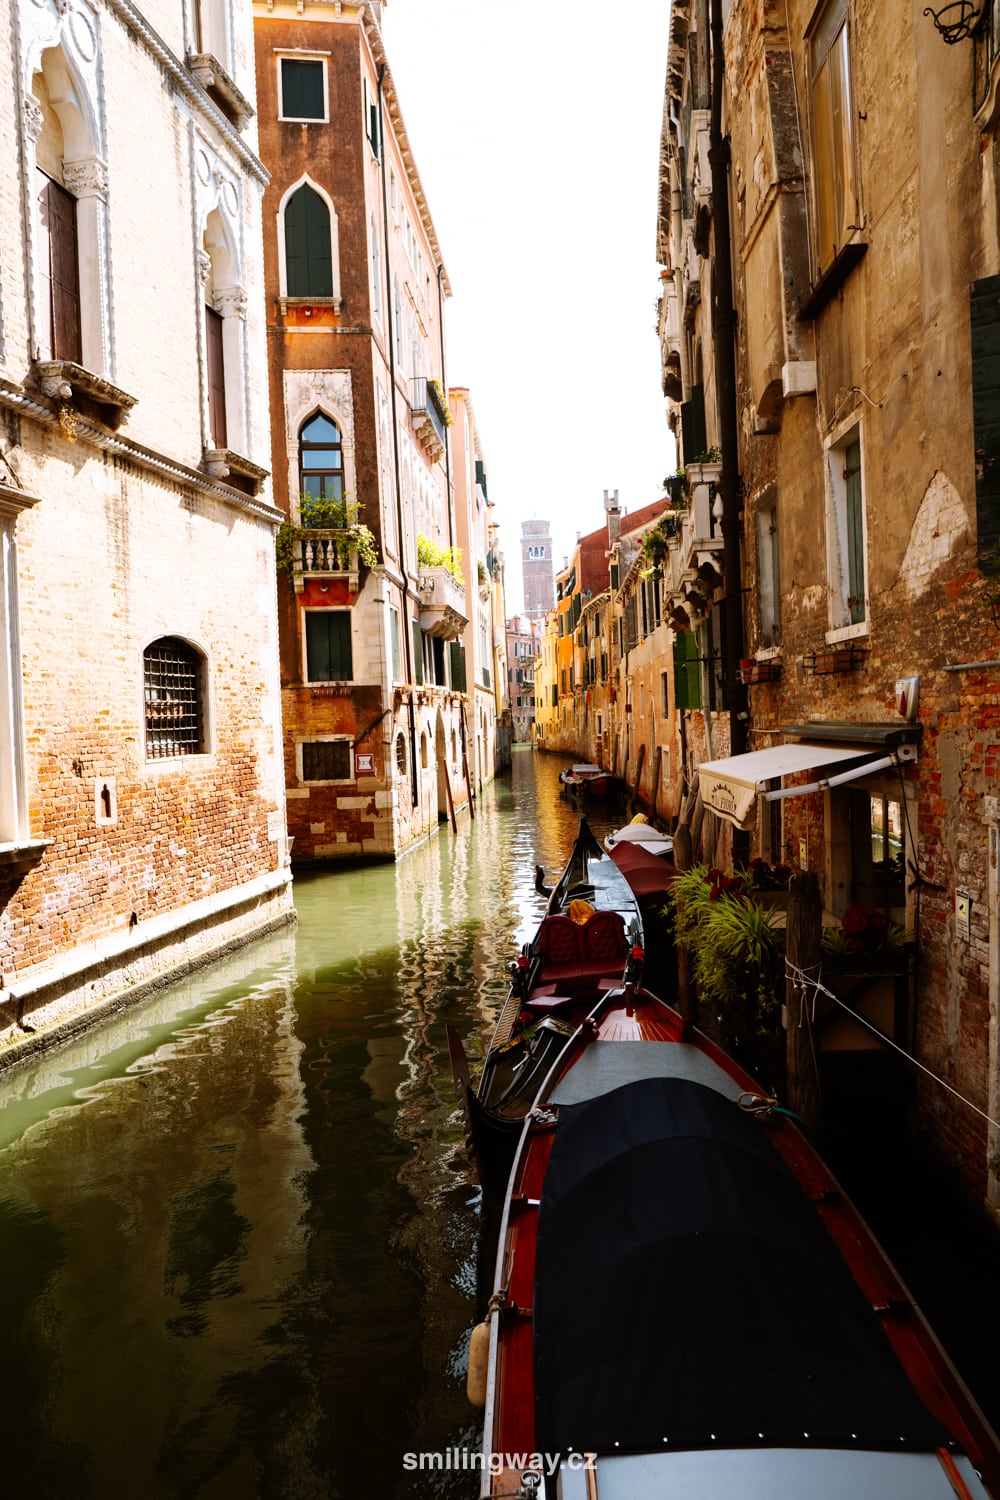 Benátky za jeden den / gondola, Benátky